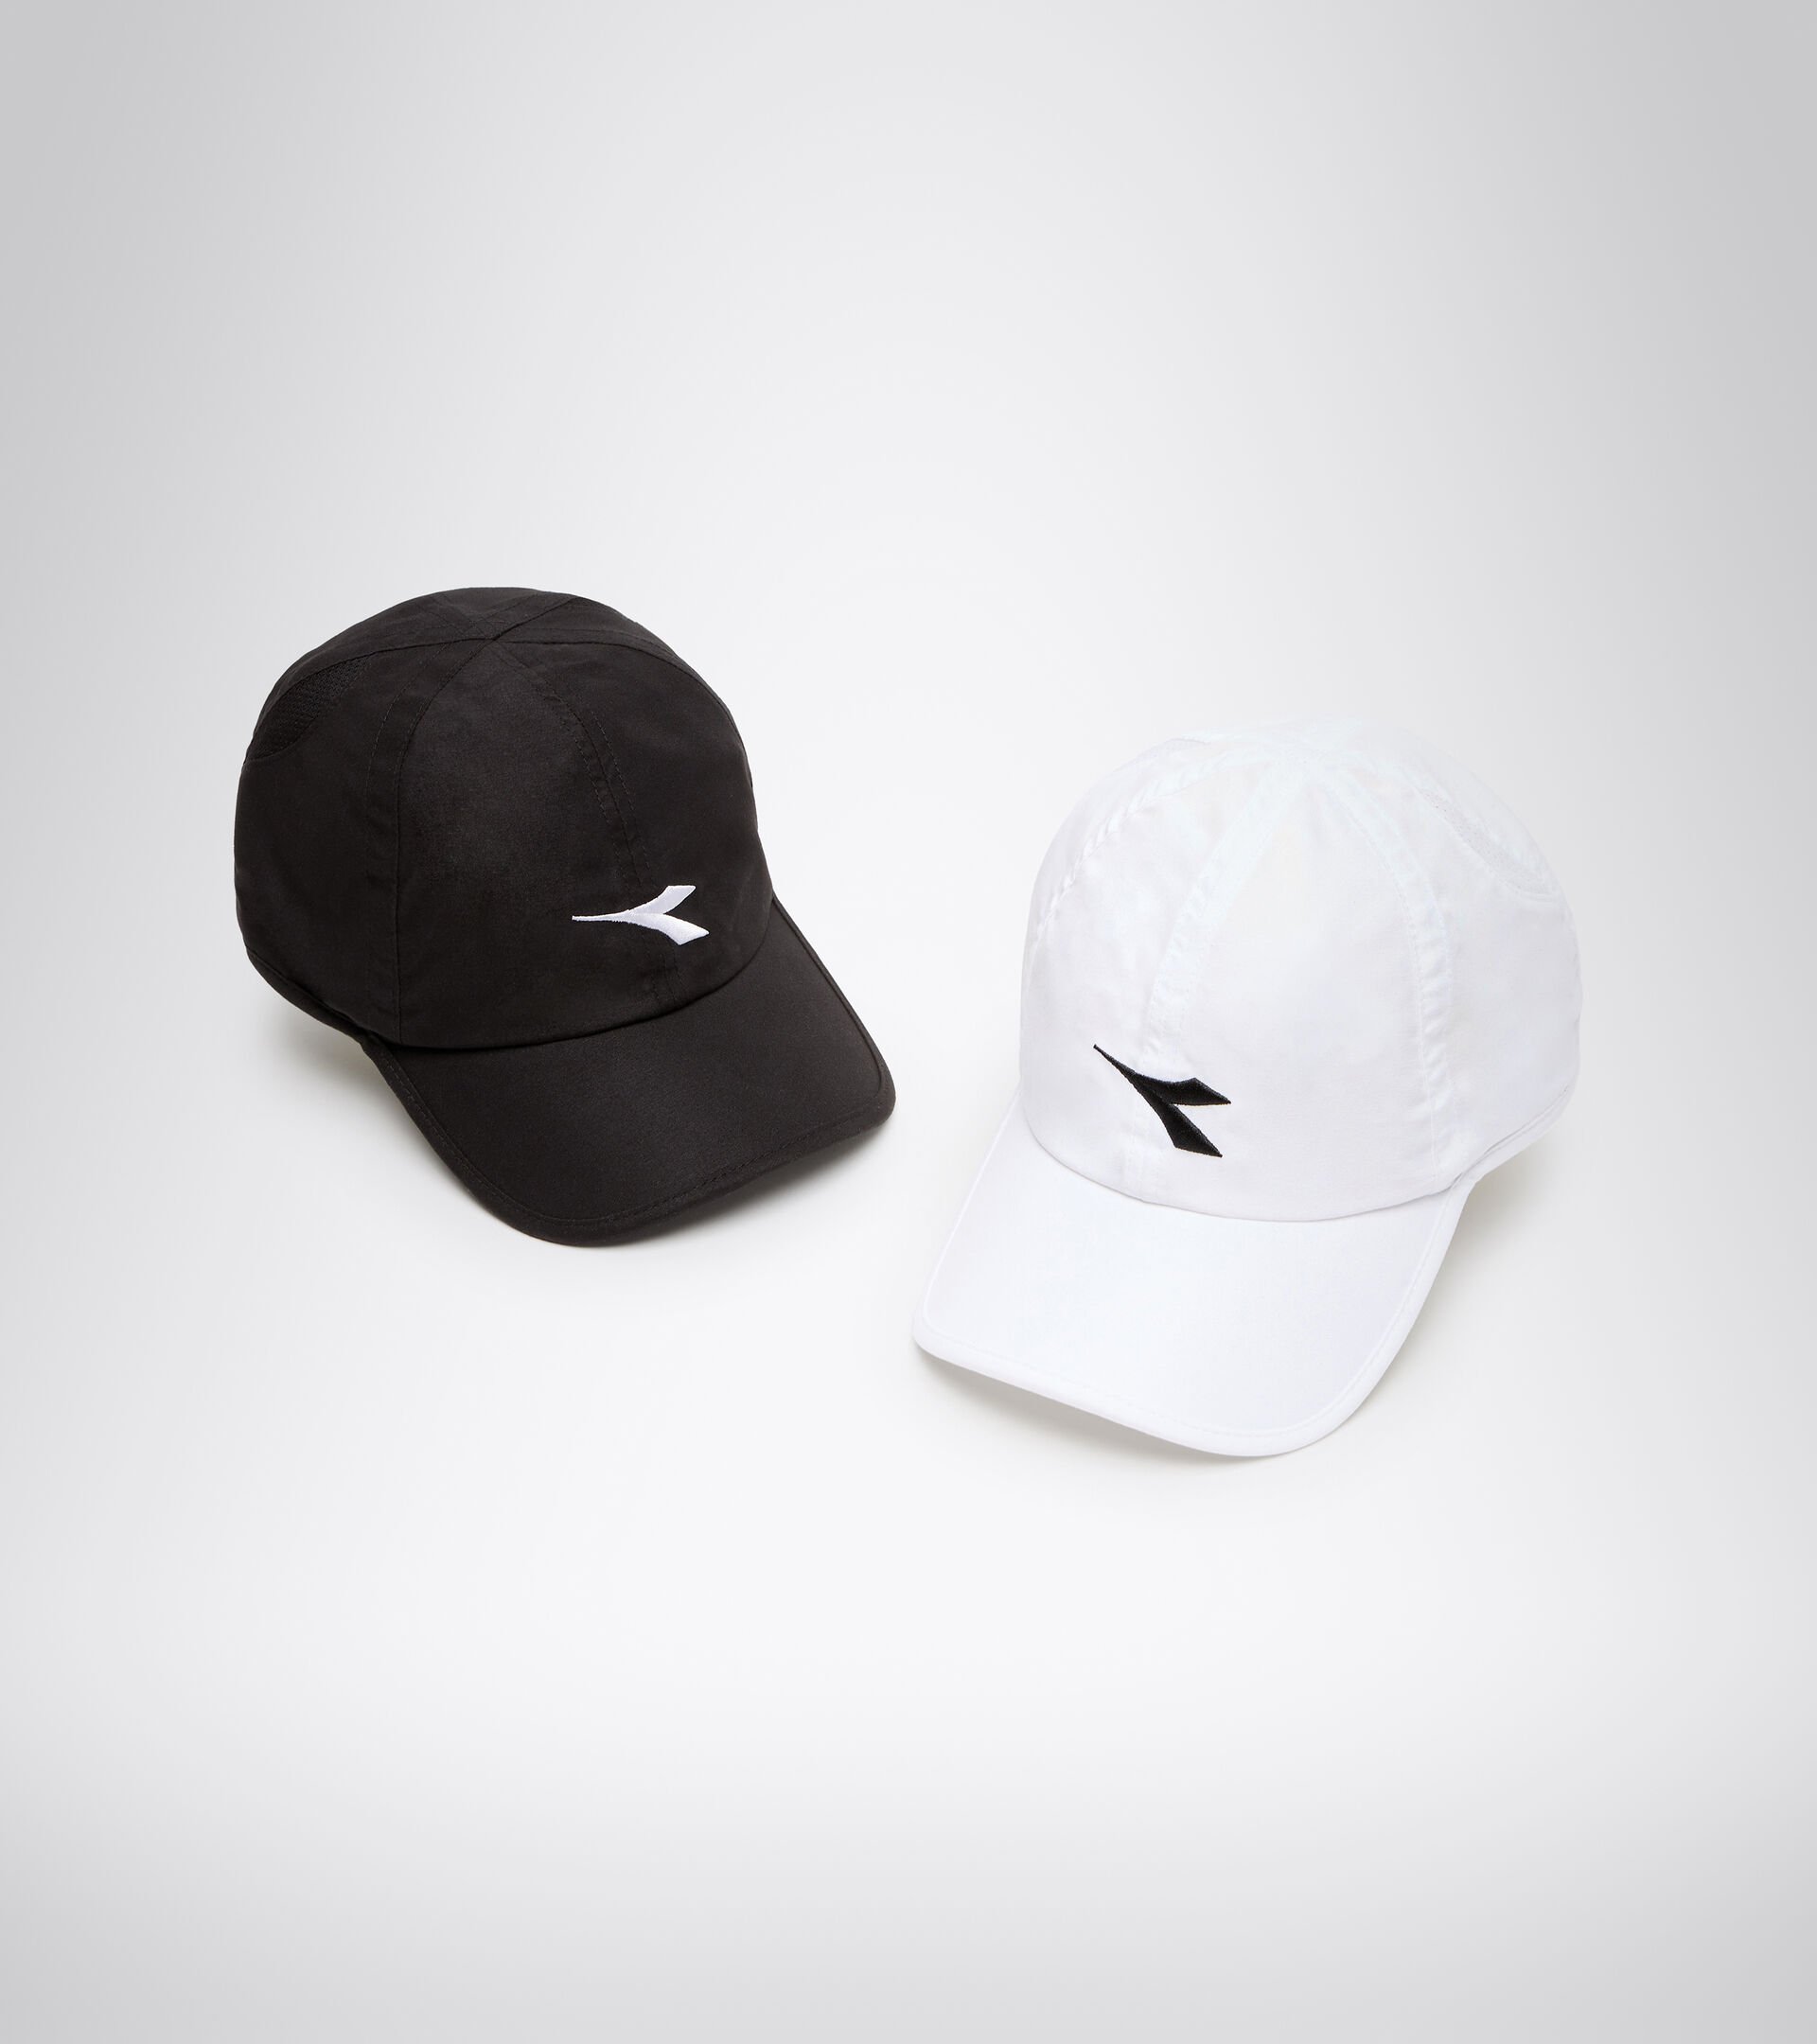 Tennis-style hat - Unisex ADJUSTABLE CAP BLACK/OPTICAL WHITE - Diadora